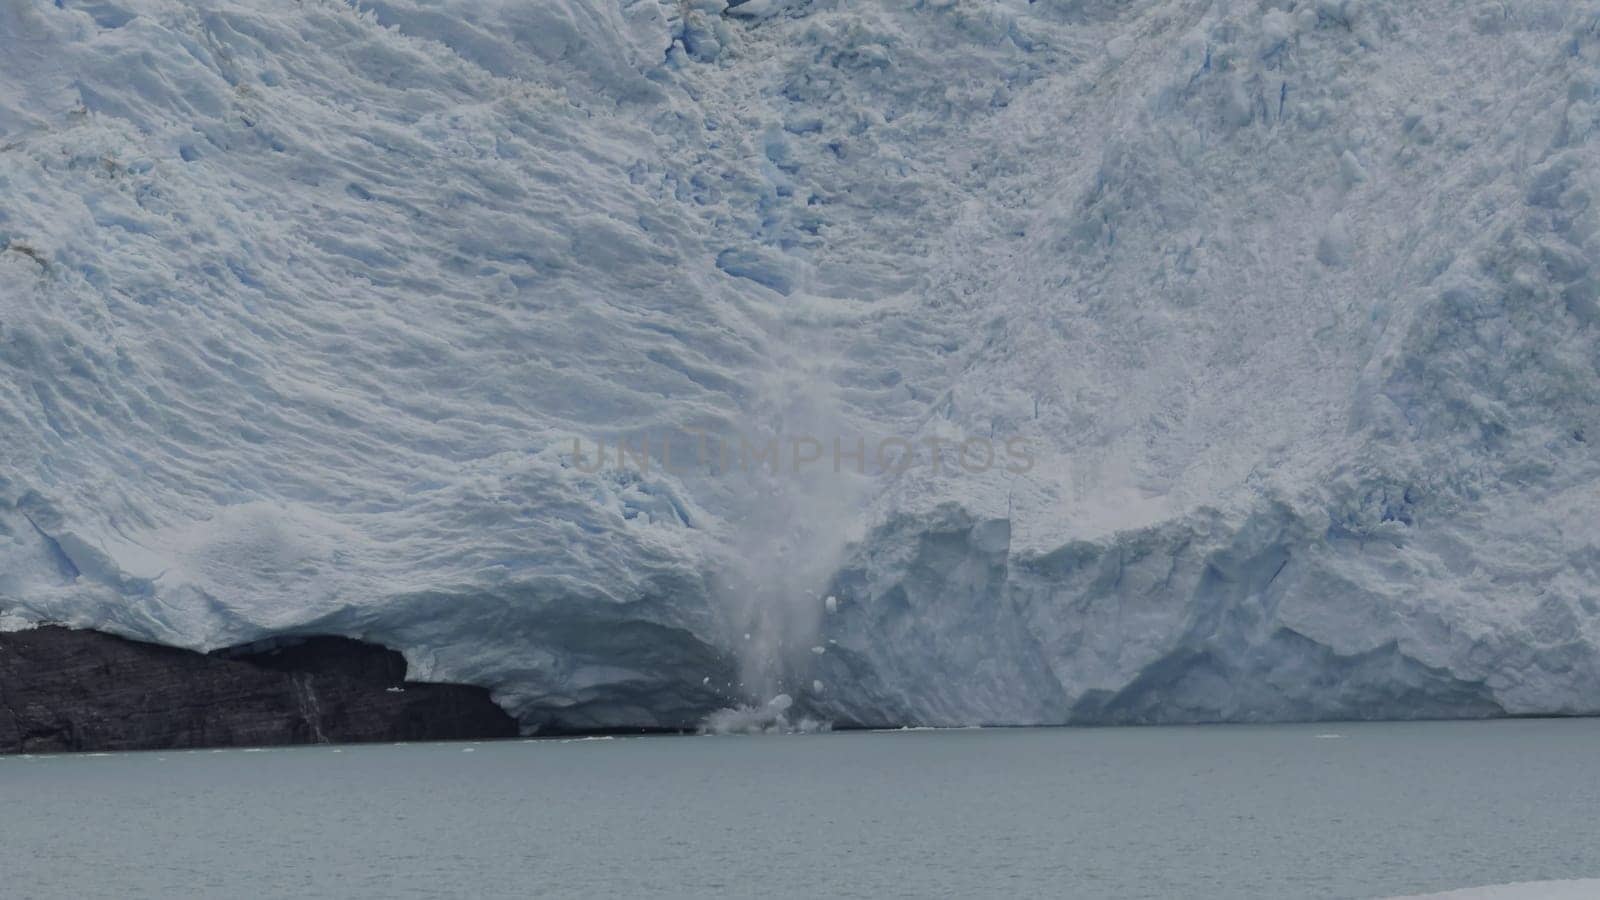 Glacial Calving Event Capturing Ice Falling into Ocean by FerradalFCG